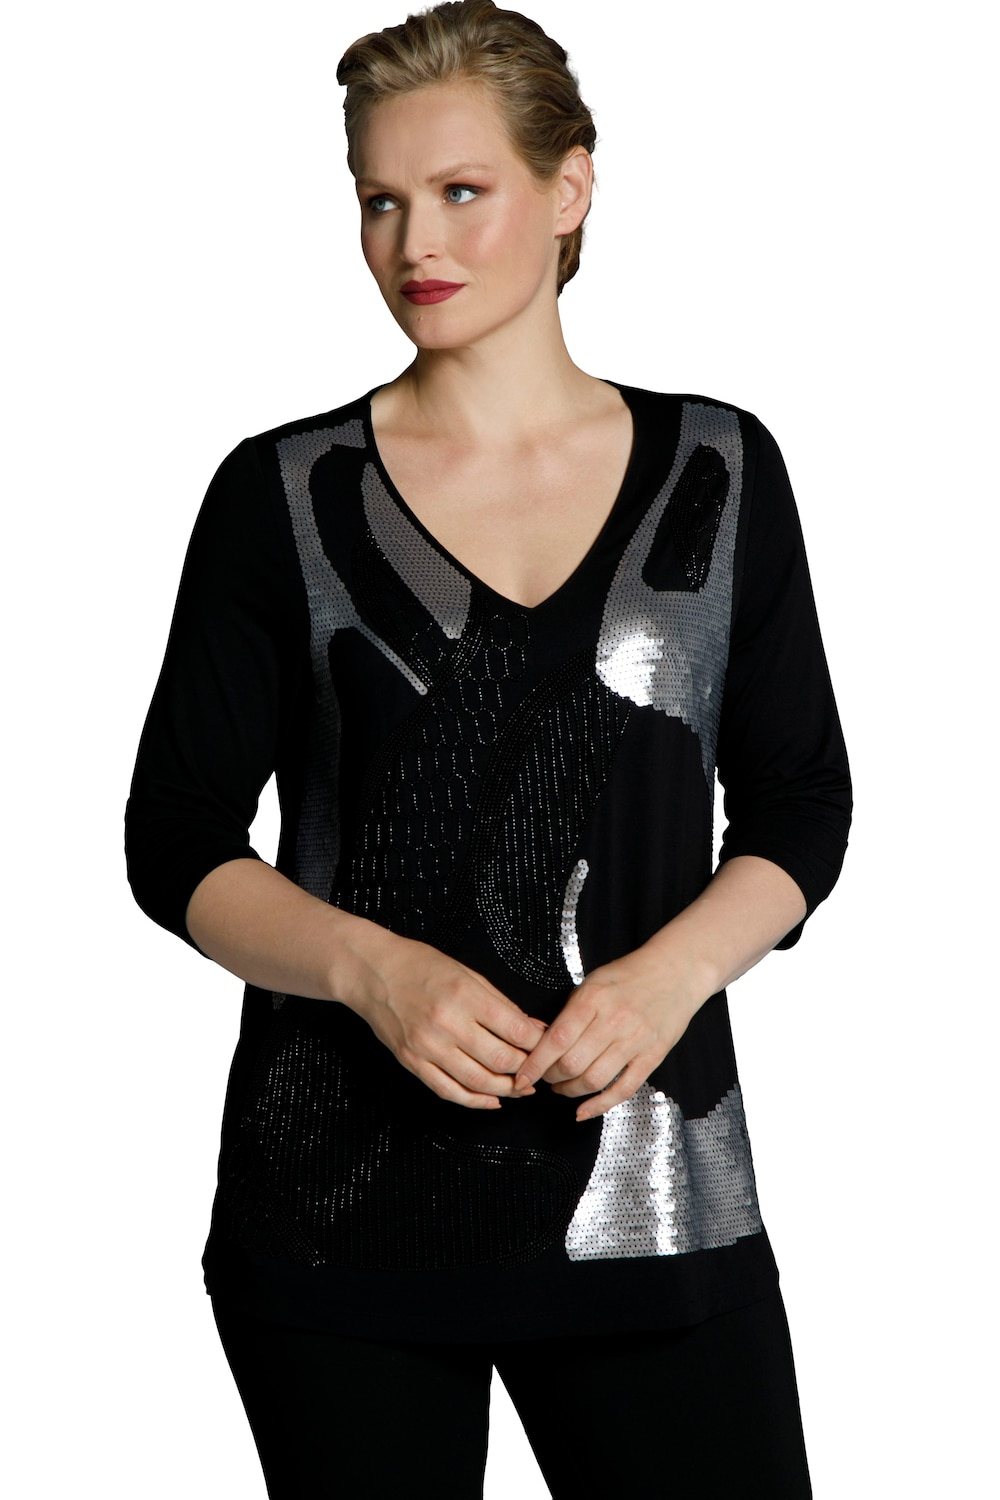 Plus Size Beads & Sequins V-Neck Stretch Knit Top, Woman, black, size: 20/22, viscose, Ulla Popken